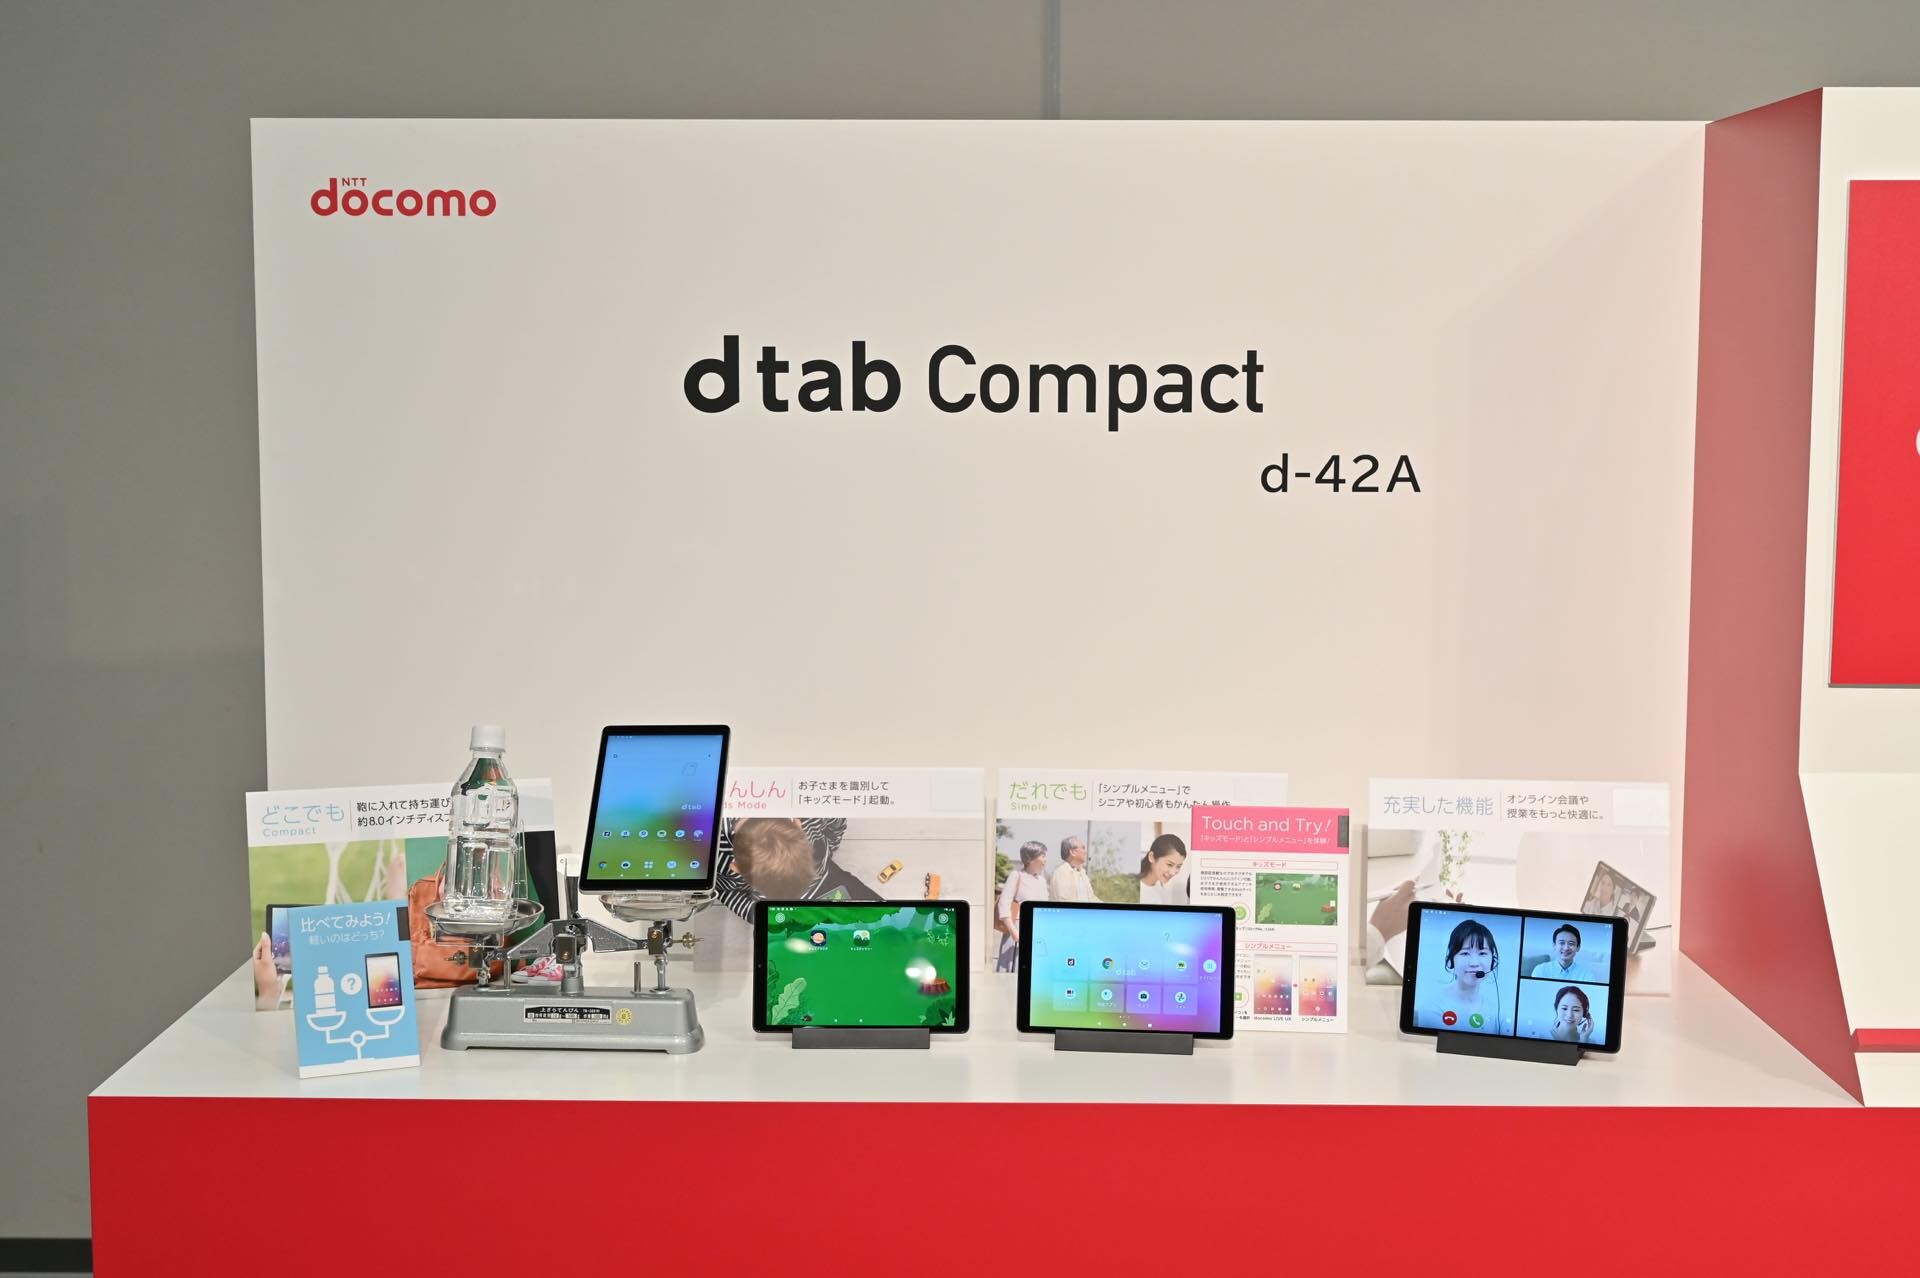 NTTドコモ、8インチタブレット「dtab Compact d-42A」を発表！今冬発売で、生活防水・防塵に対応。開発はレノボが担当 - S-MAX